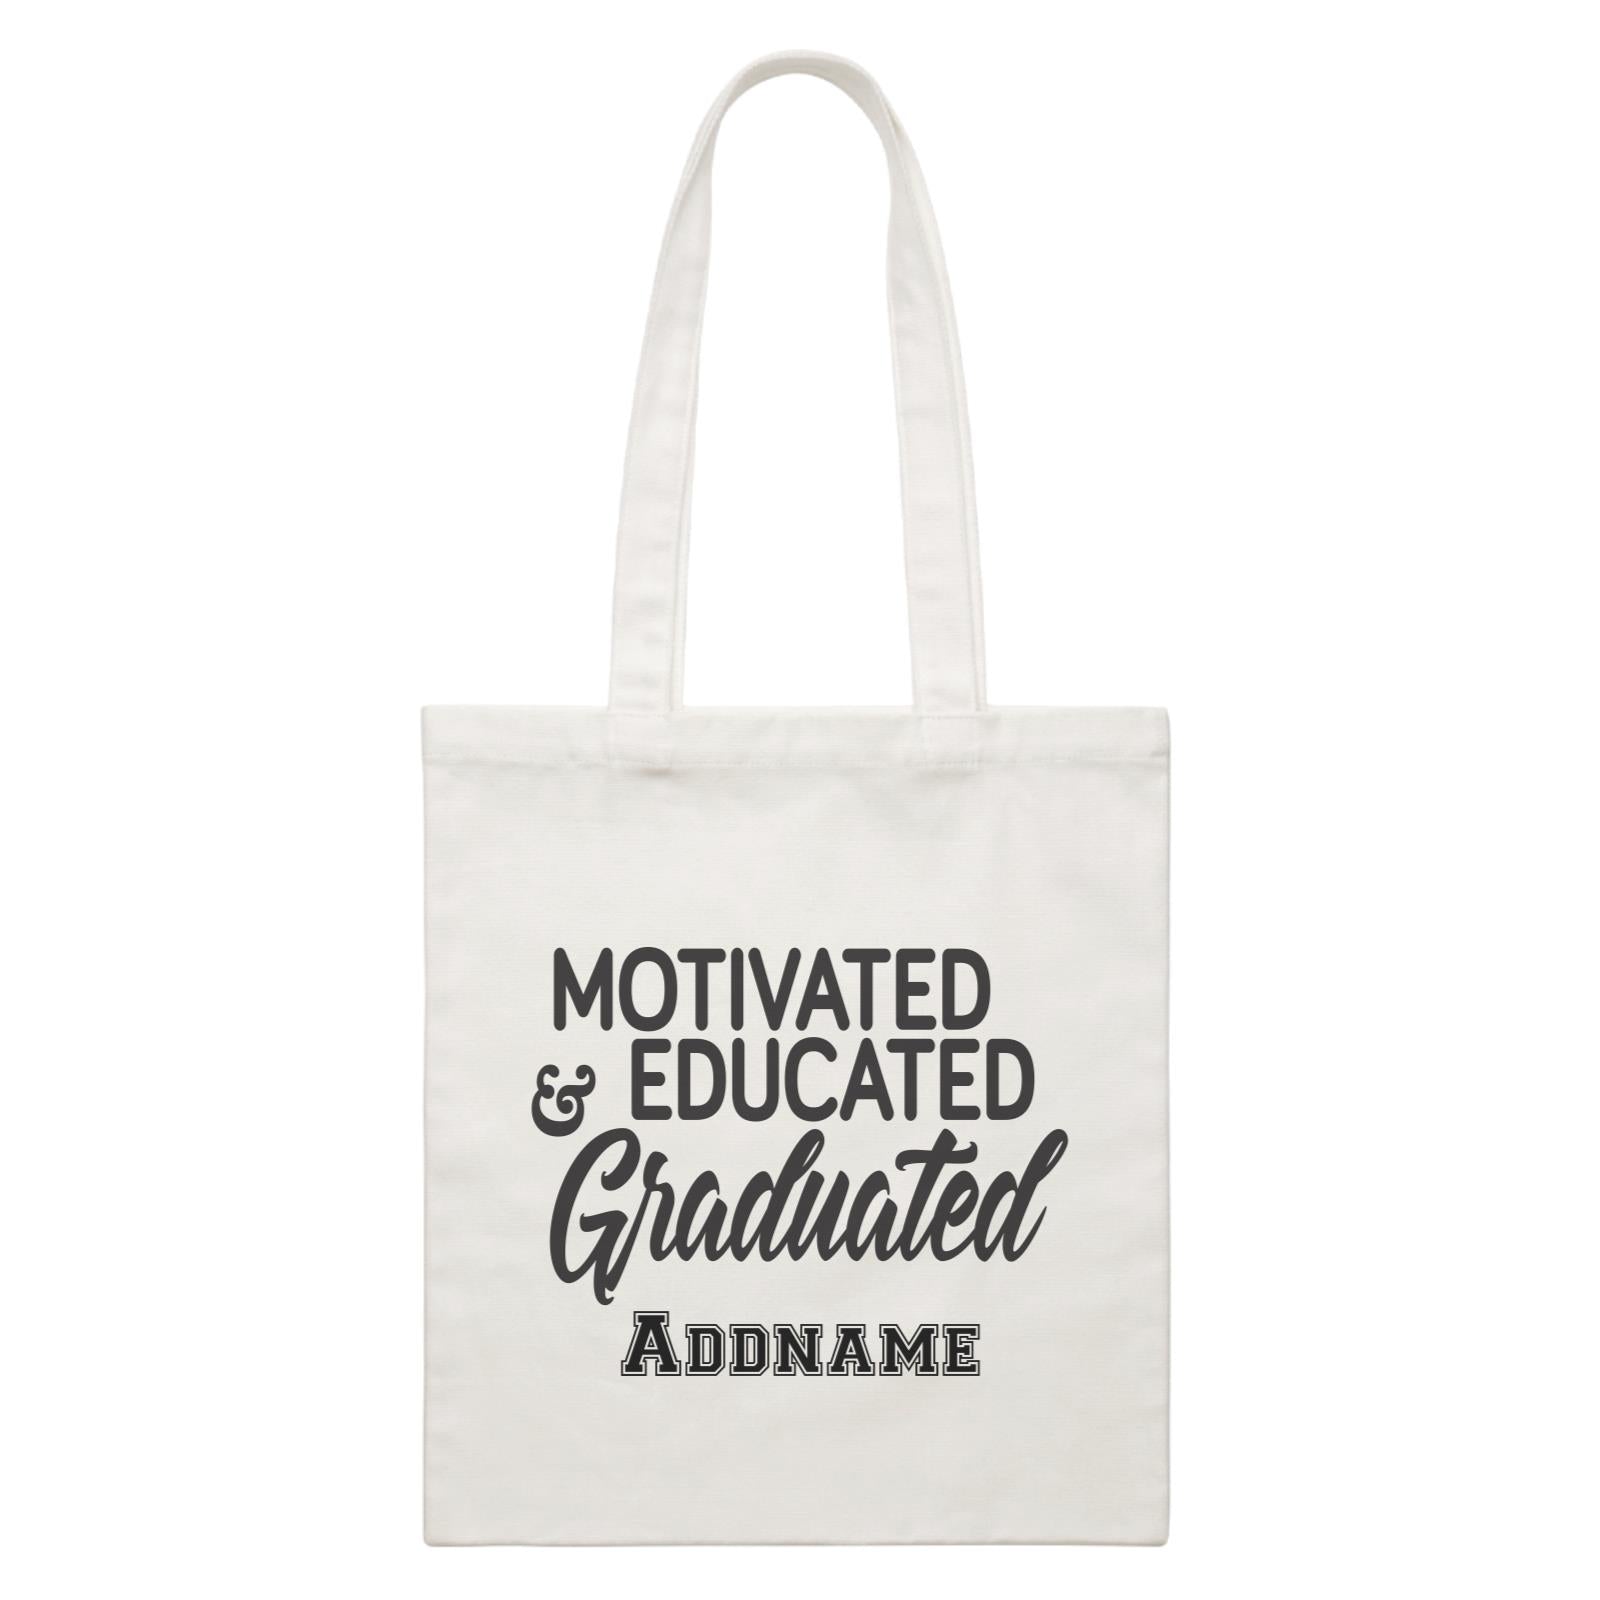 Graduation Series Motivated, Educated, Graduated White Canvas Bag